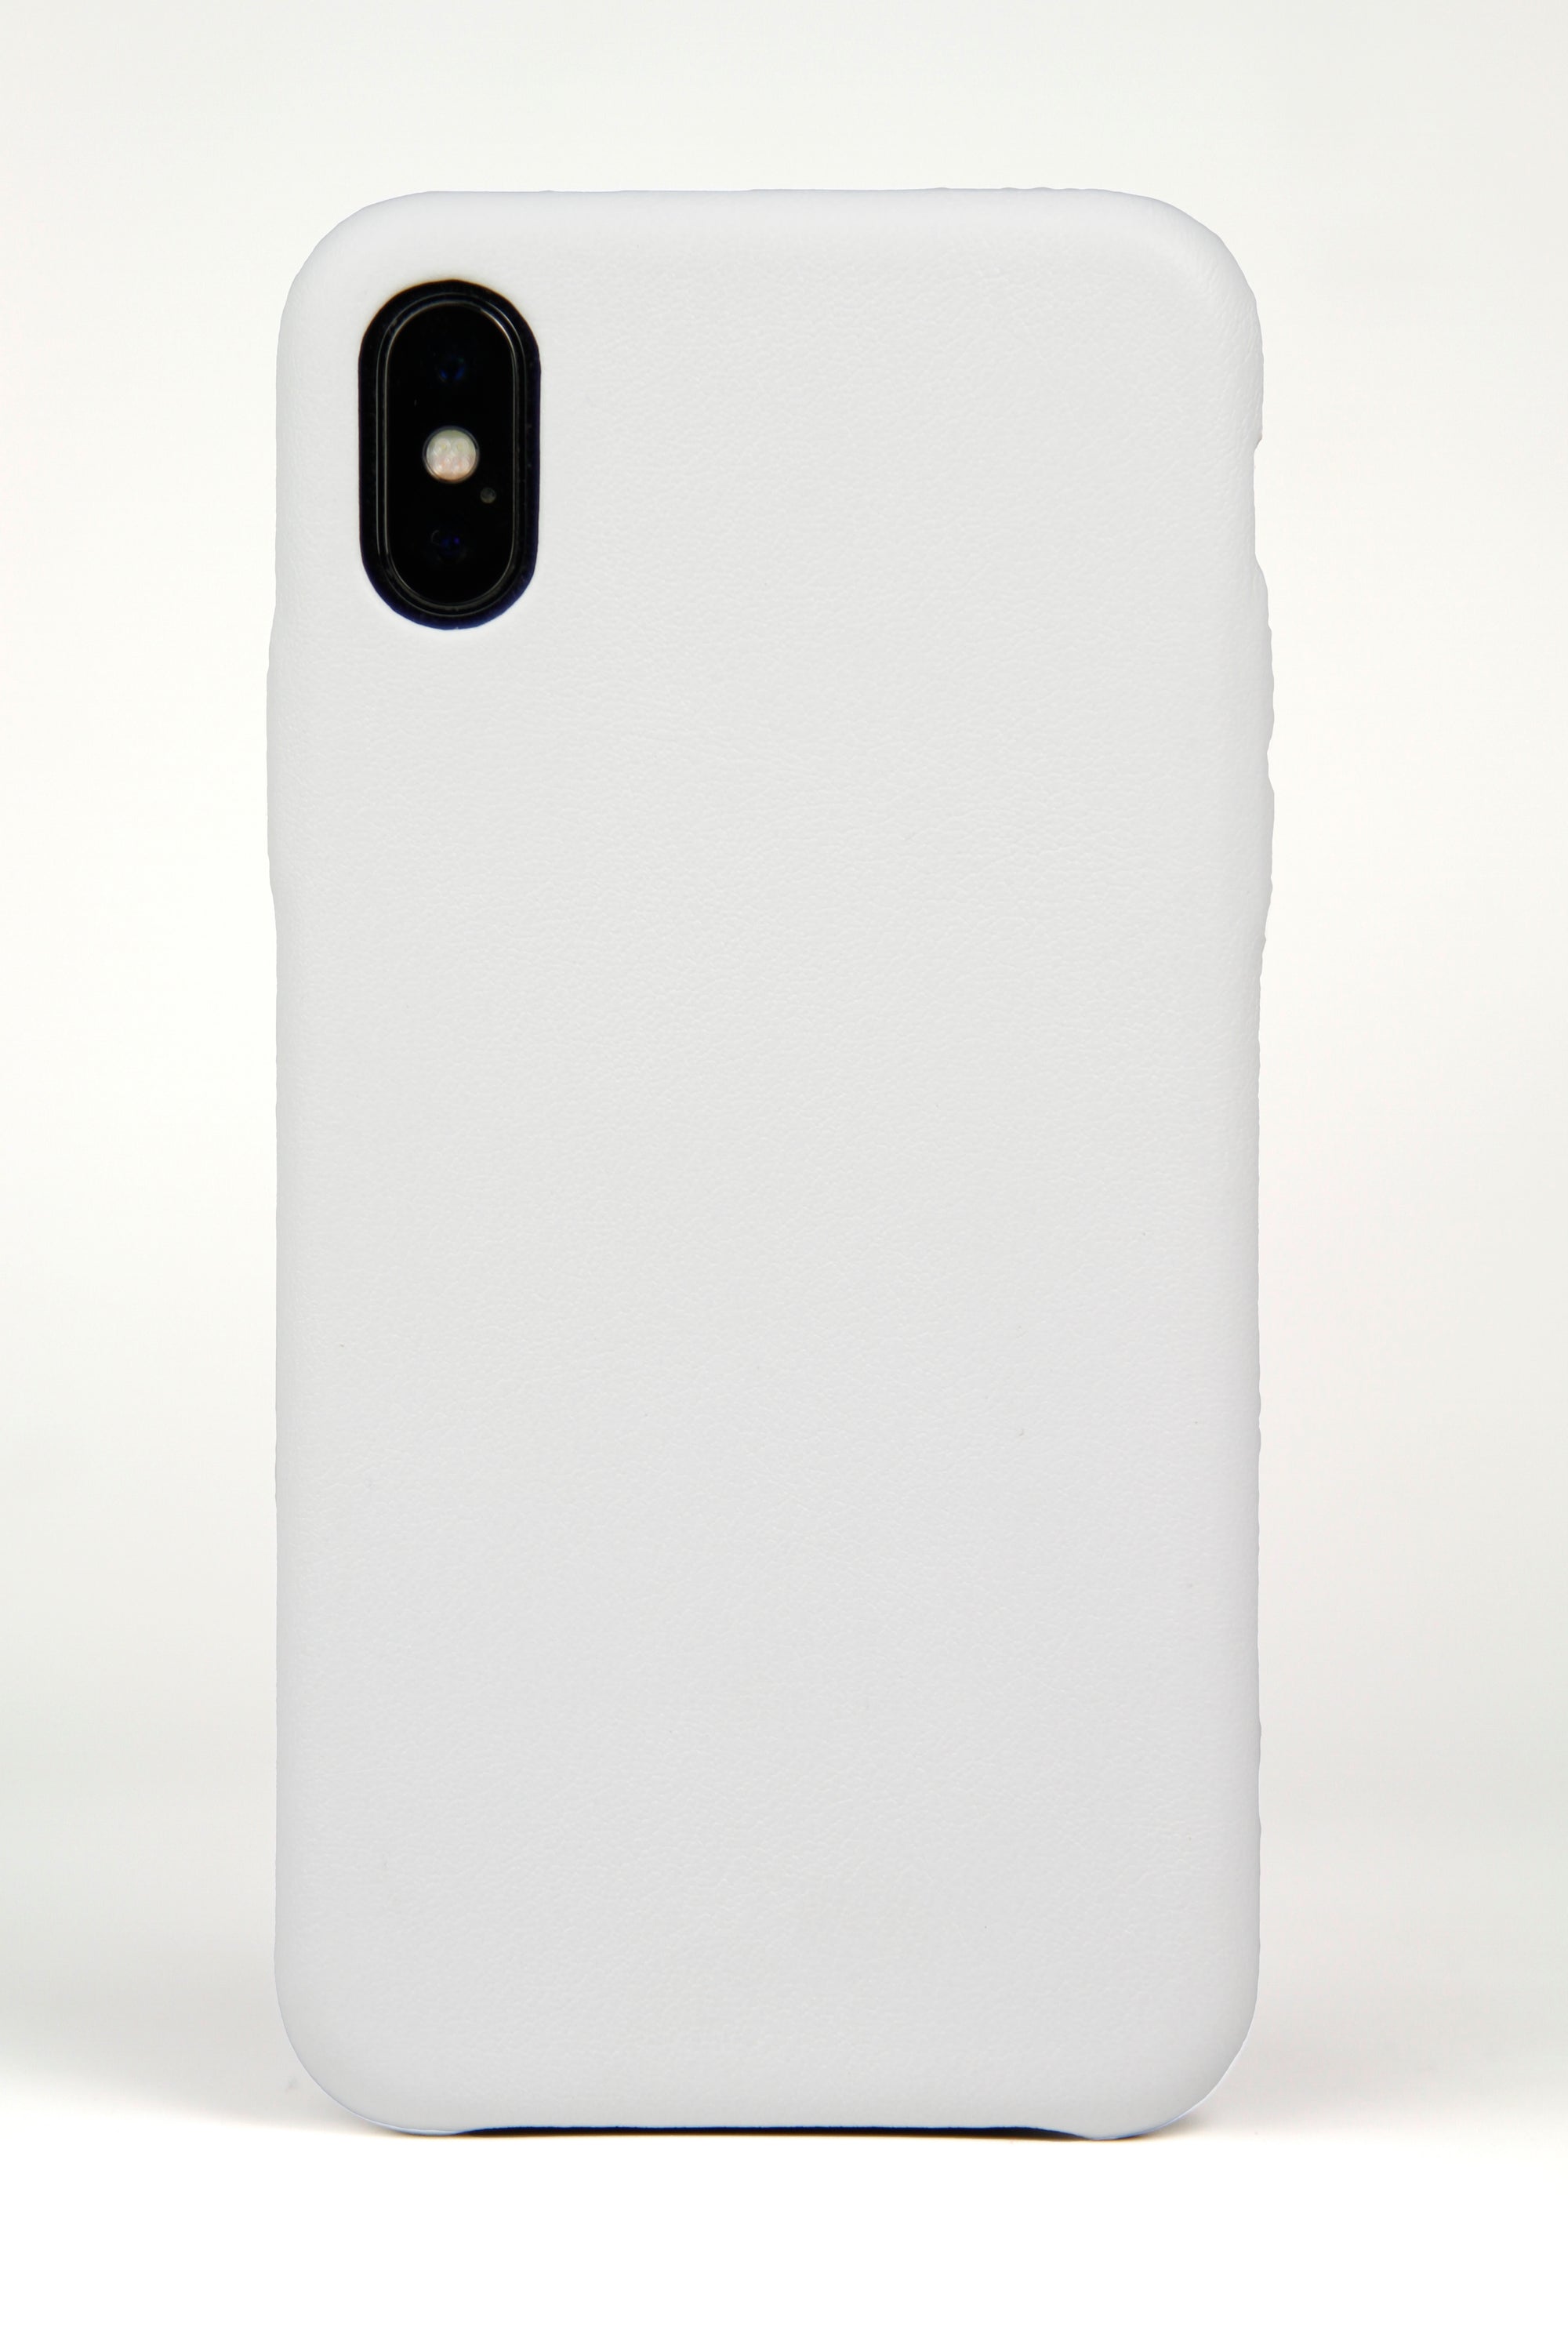 Coque pour iPhone X, cuir blanc